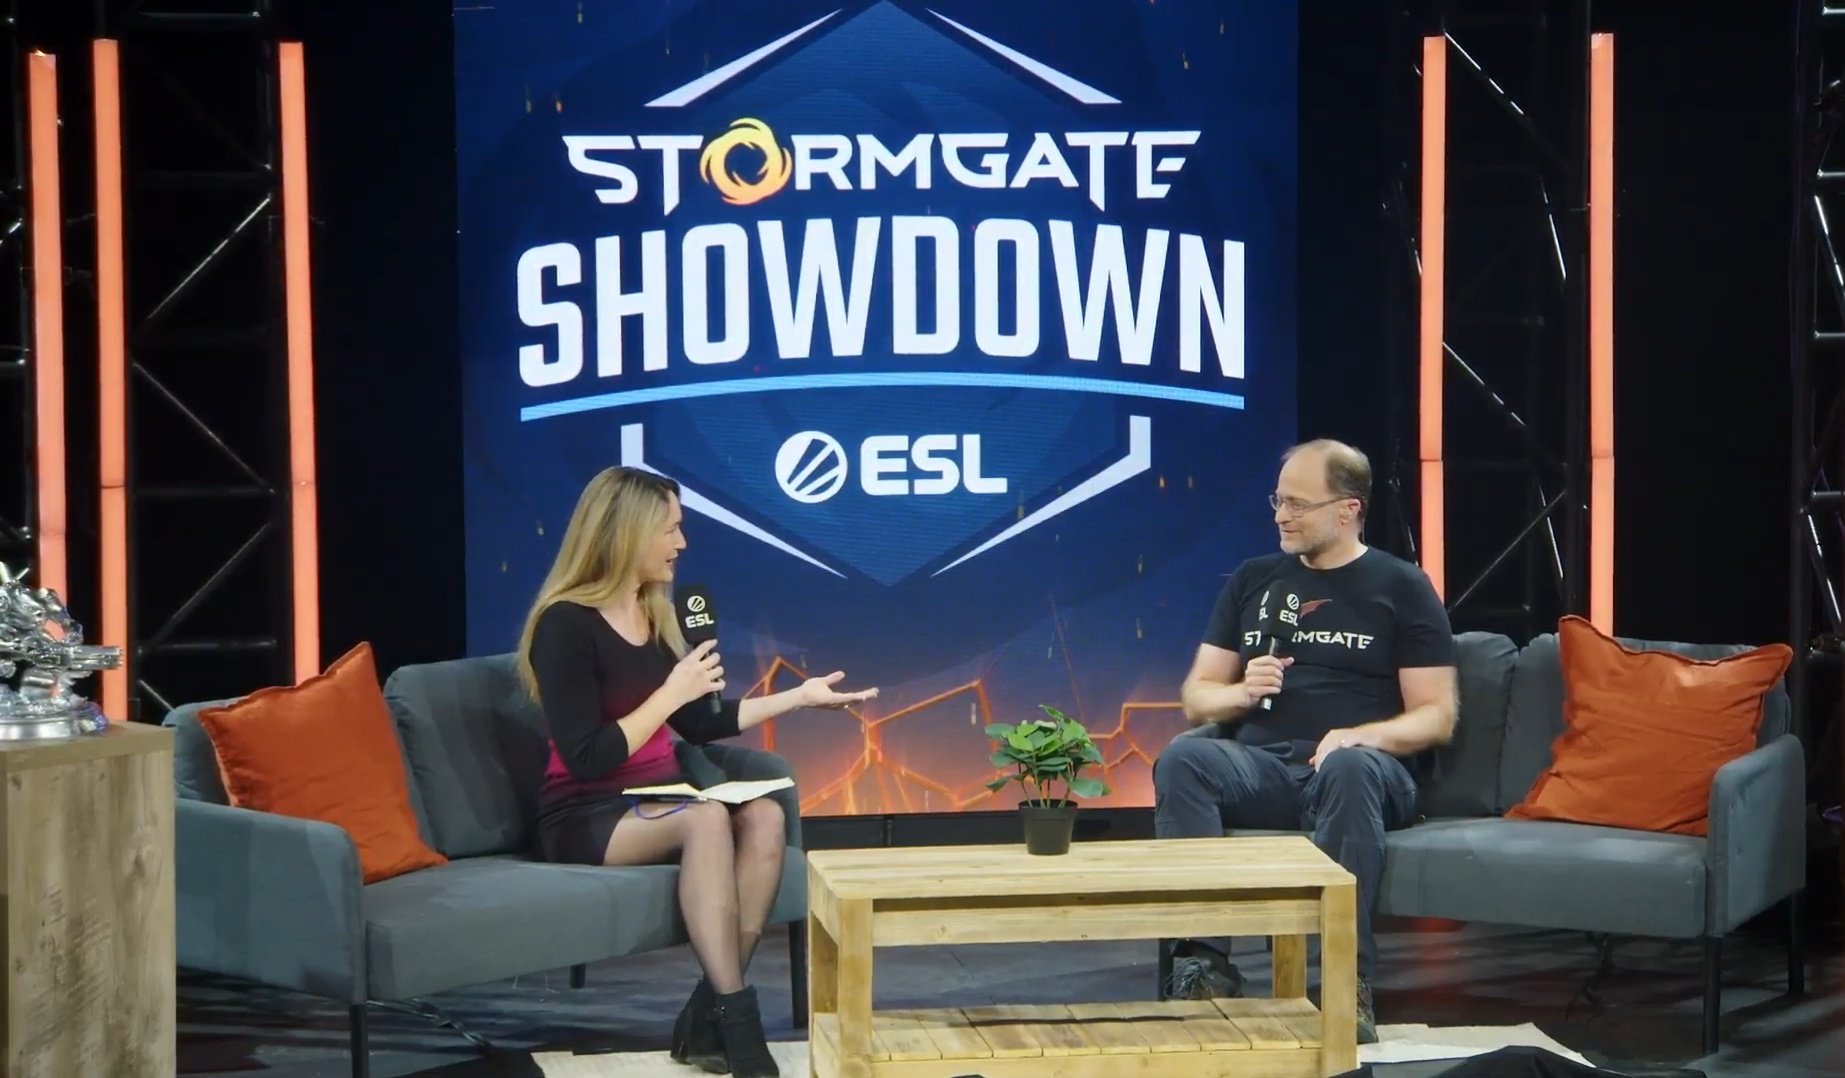 ESL Stormgate Showdown at DreamHack Atlanta 